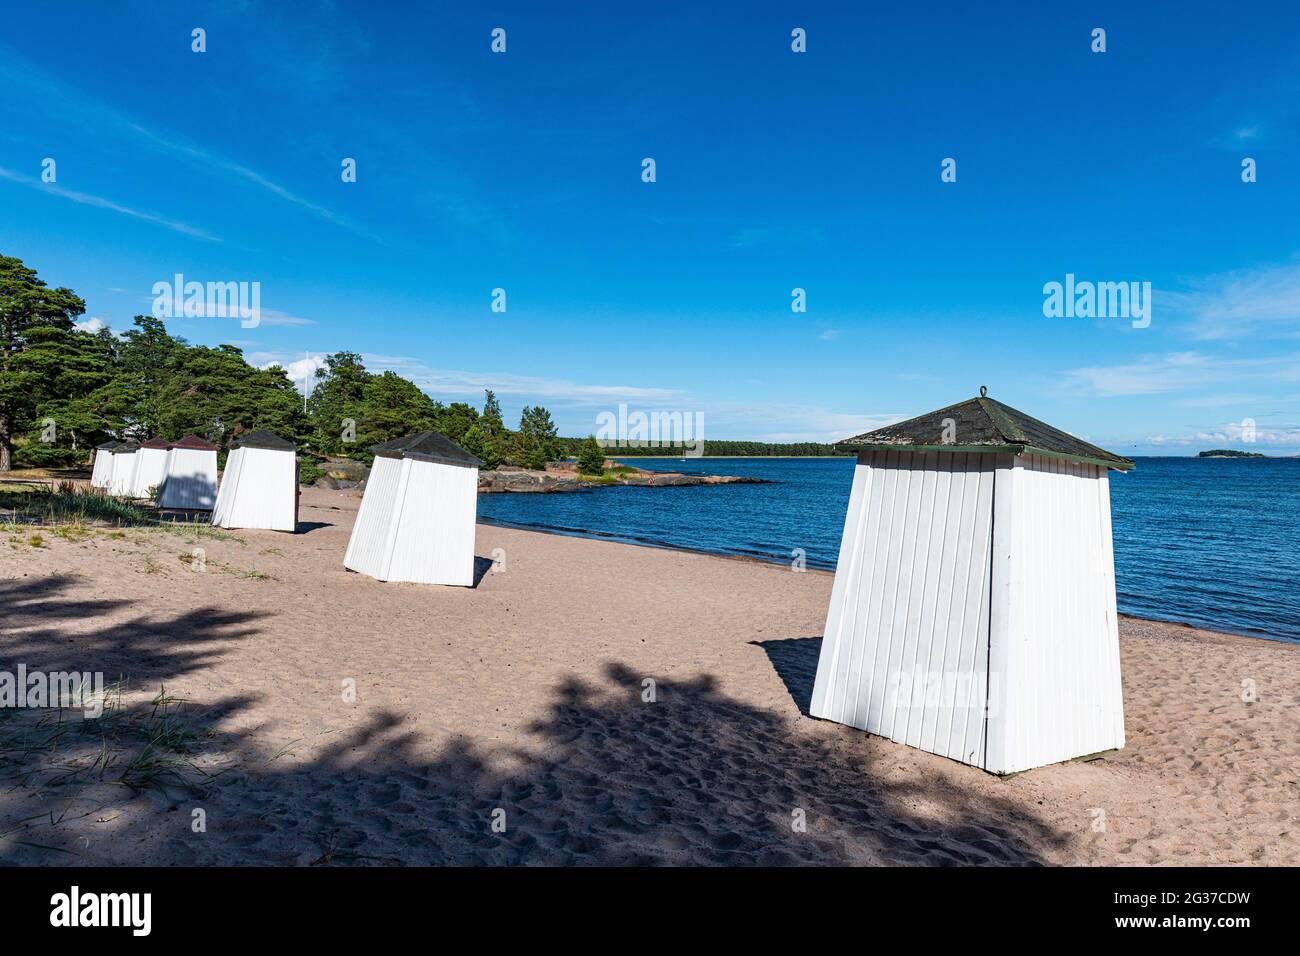 Beach huts on a deserted beach, Hanko, southern Finland Stock Photo